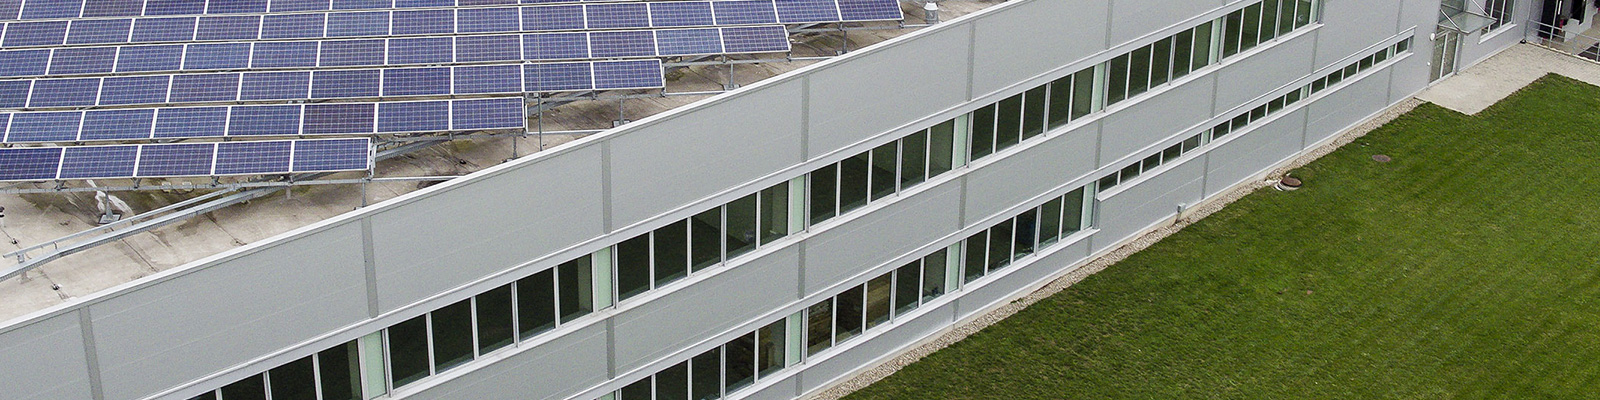 Installations PV commerciales sur les toits